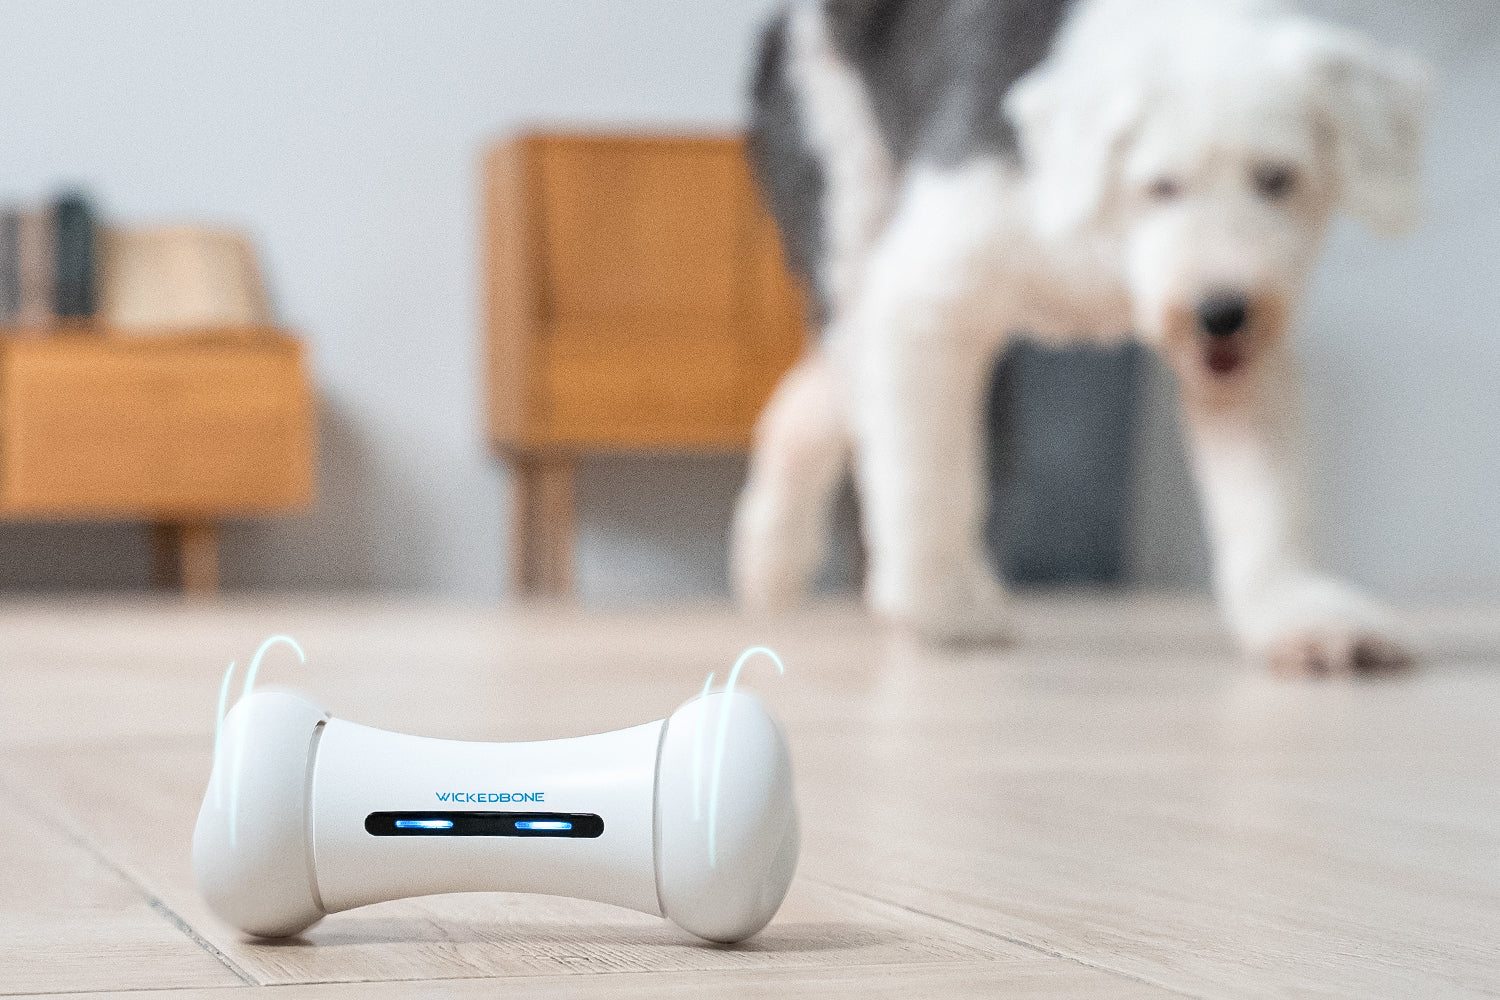 Wickedbone Smart Bone - Automatic & Interactive Toys for Dogs